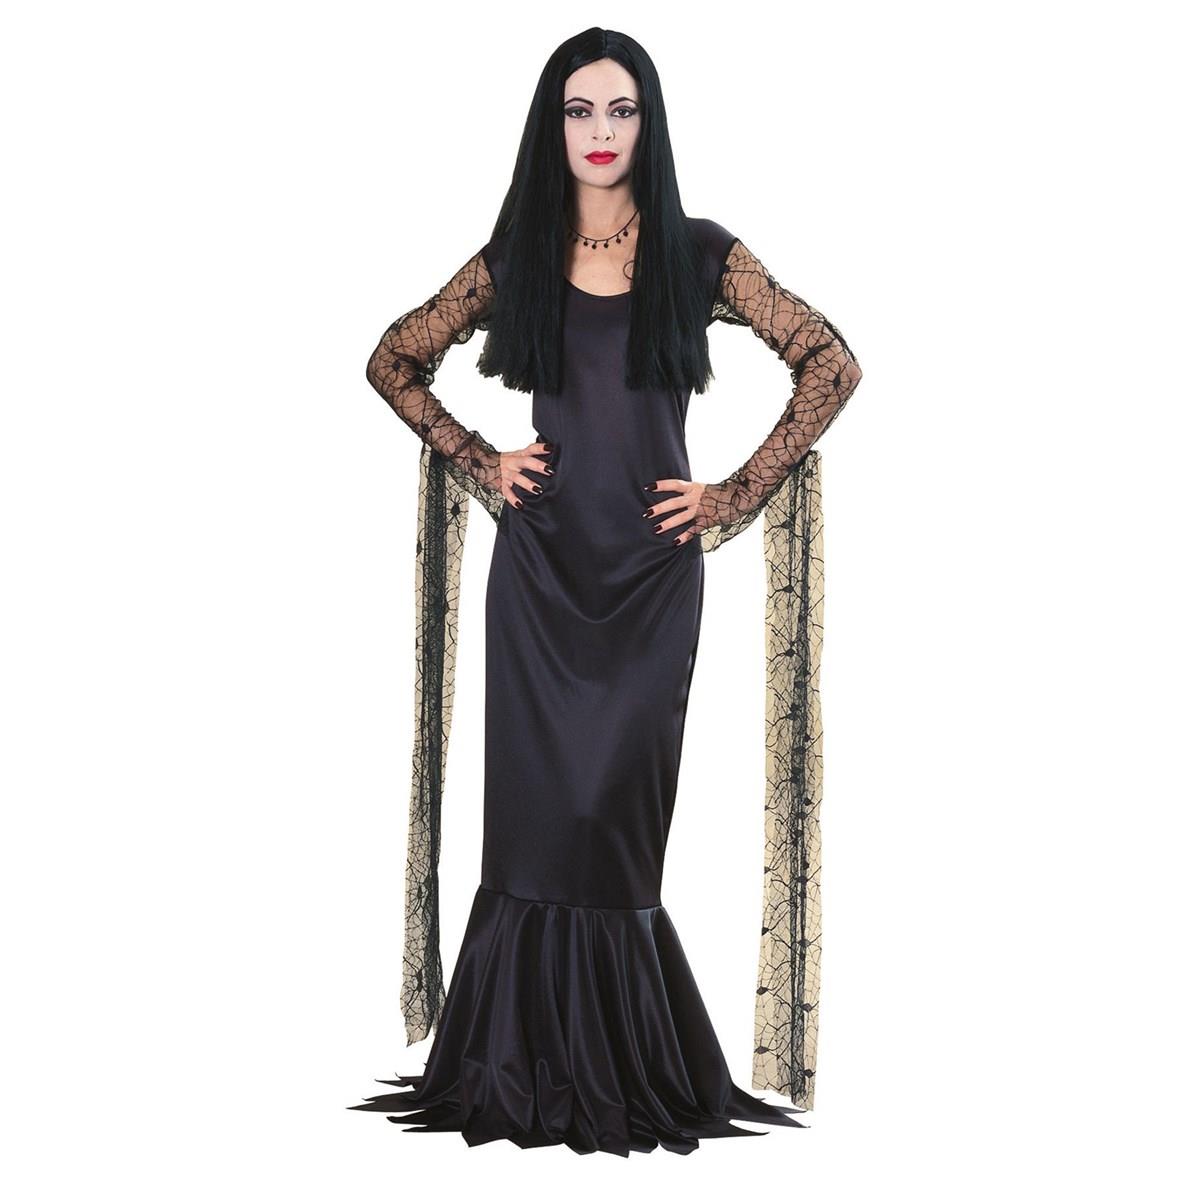 270892 Addams Family Morticia Adult Costume - Small